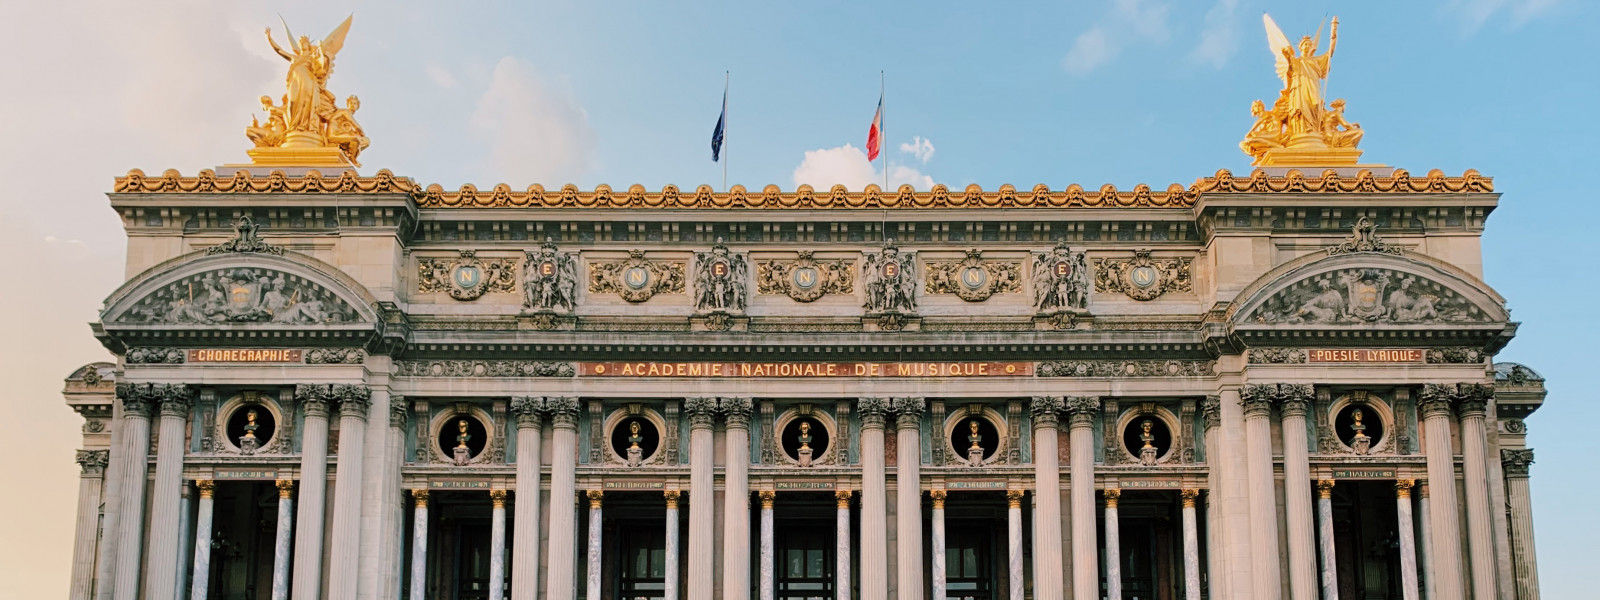 View of the principal façade of the Palais Garnier